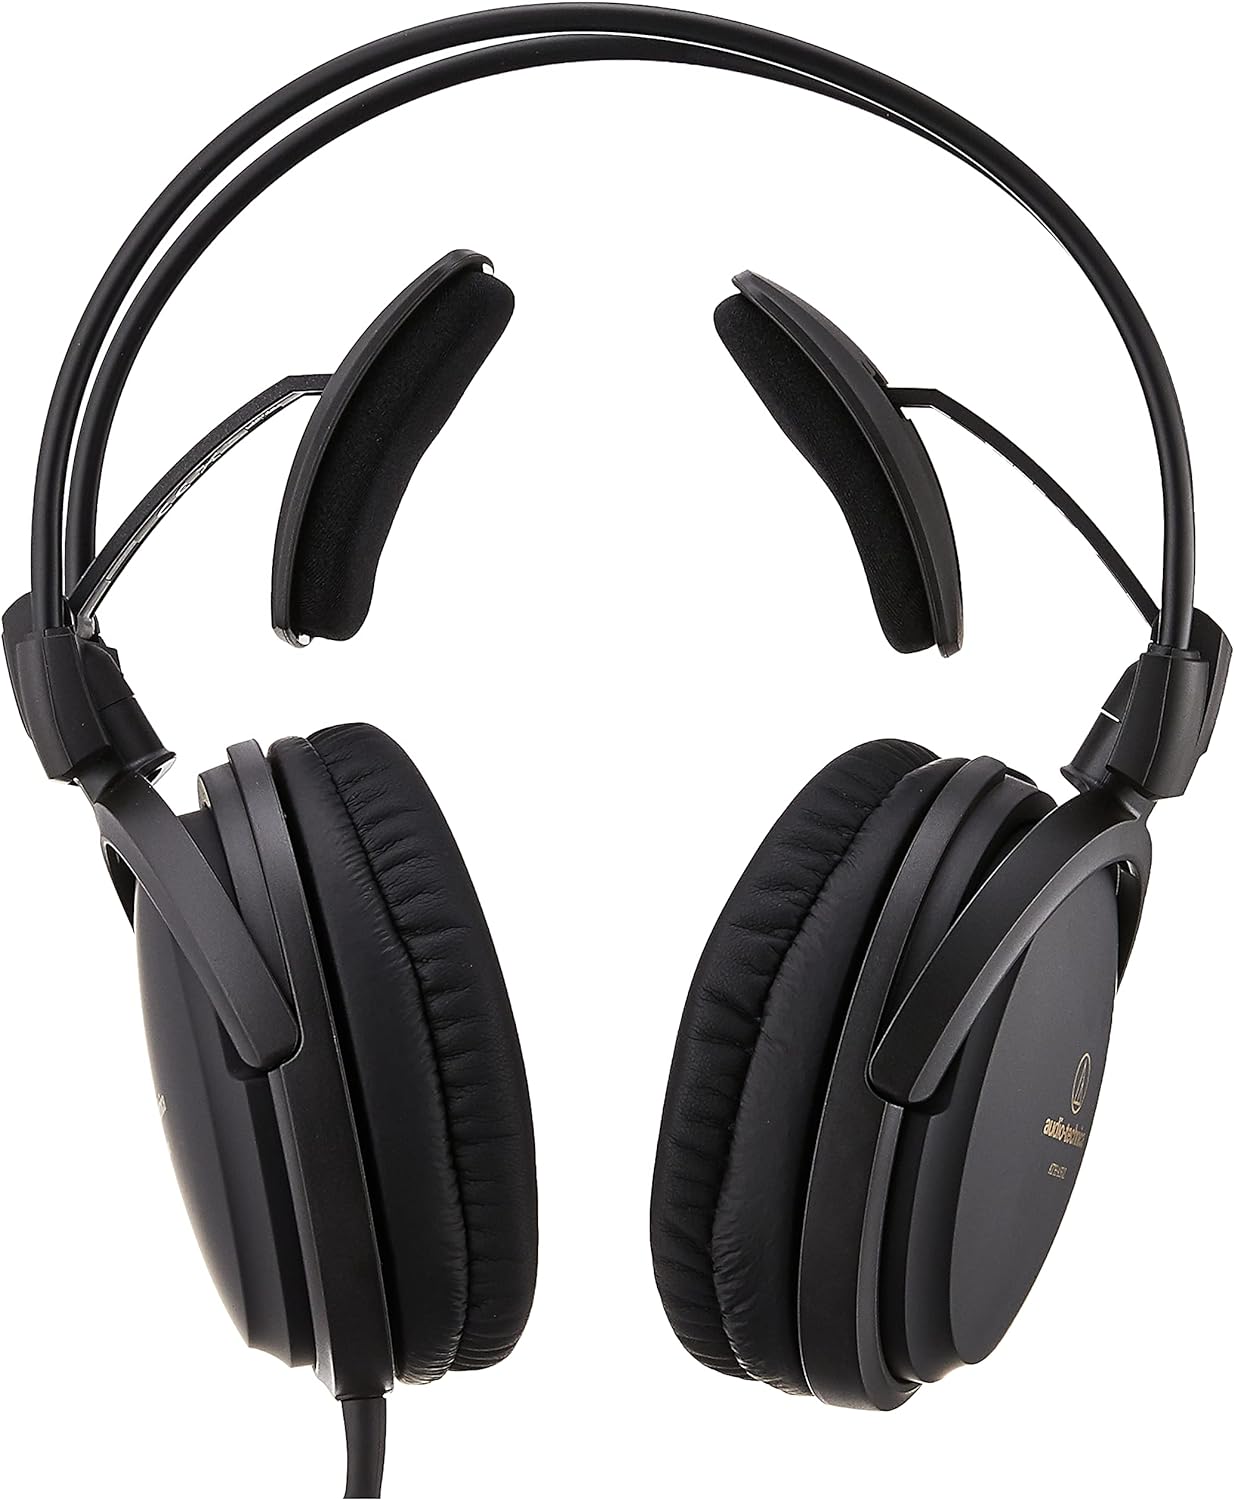 Audio-Technica ATH-A550Z Wired Headphones - Black - Pristine